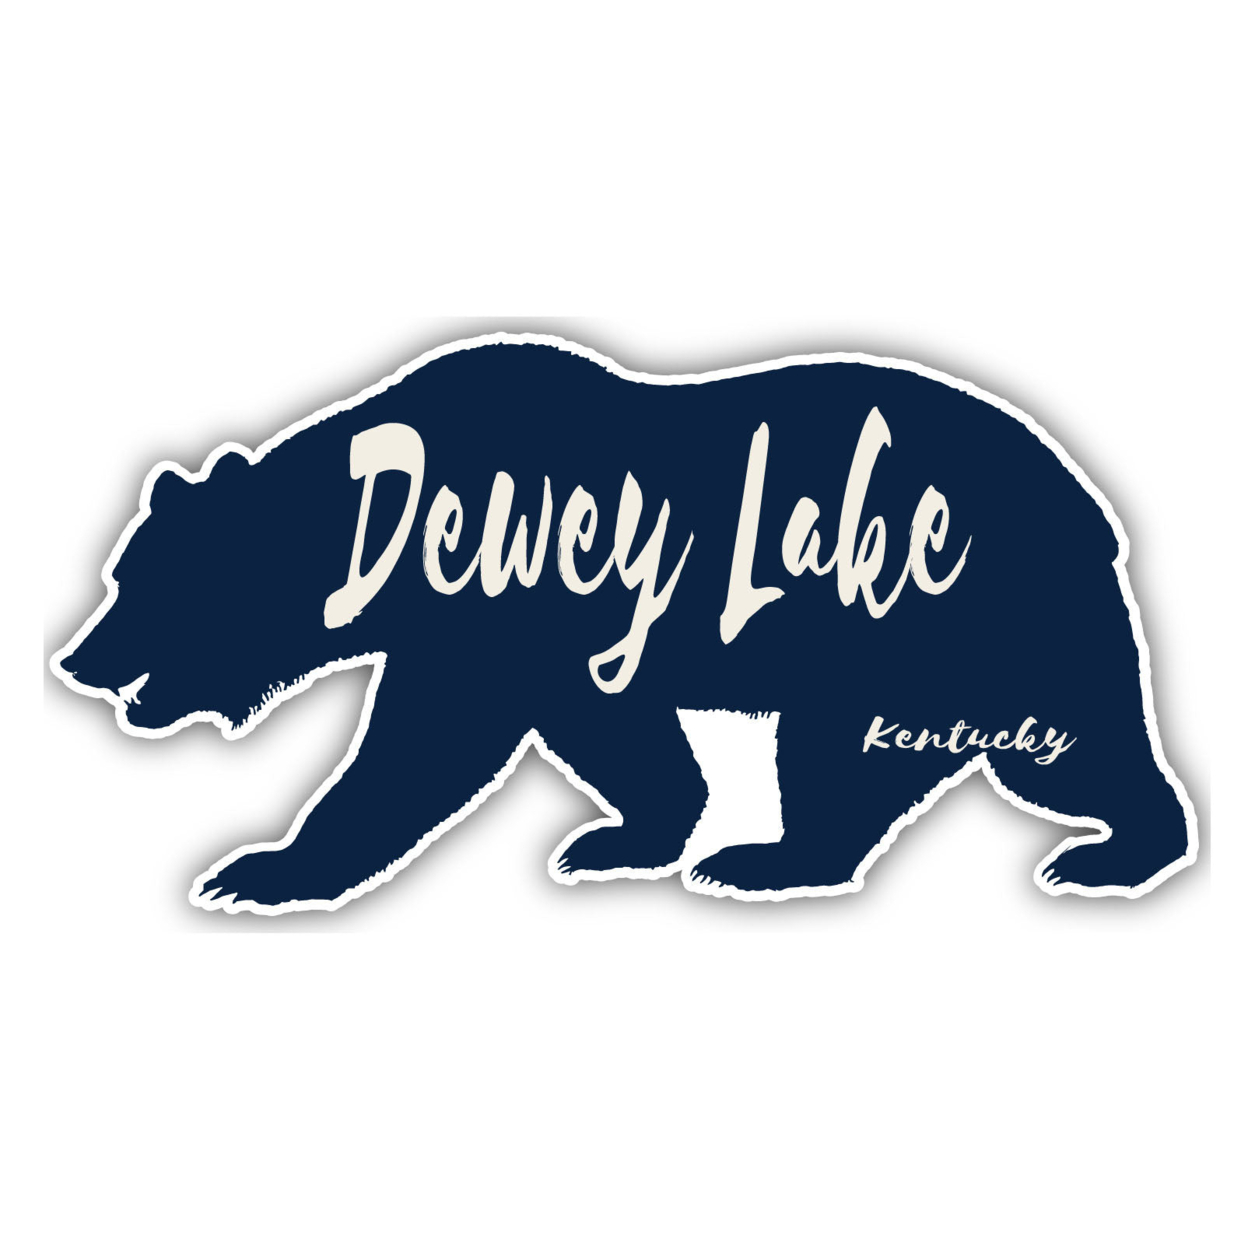 Dewey Lake Kentucky Souvenir Decorative Stickers (Choose Theme And Size) - Single Unit, 6-Inch, Bear